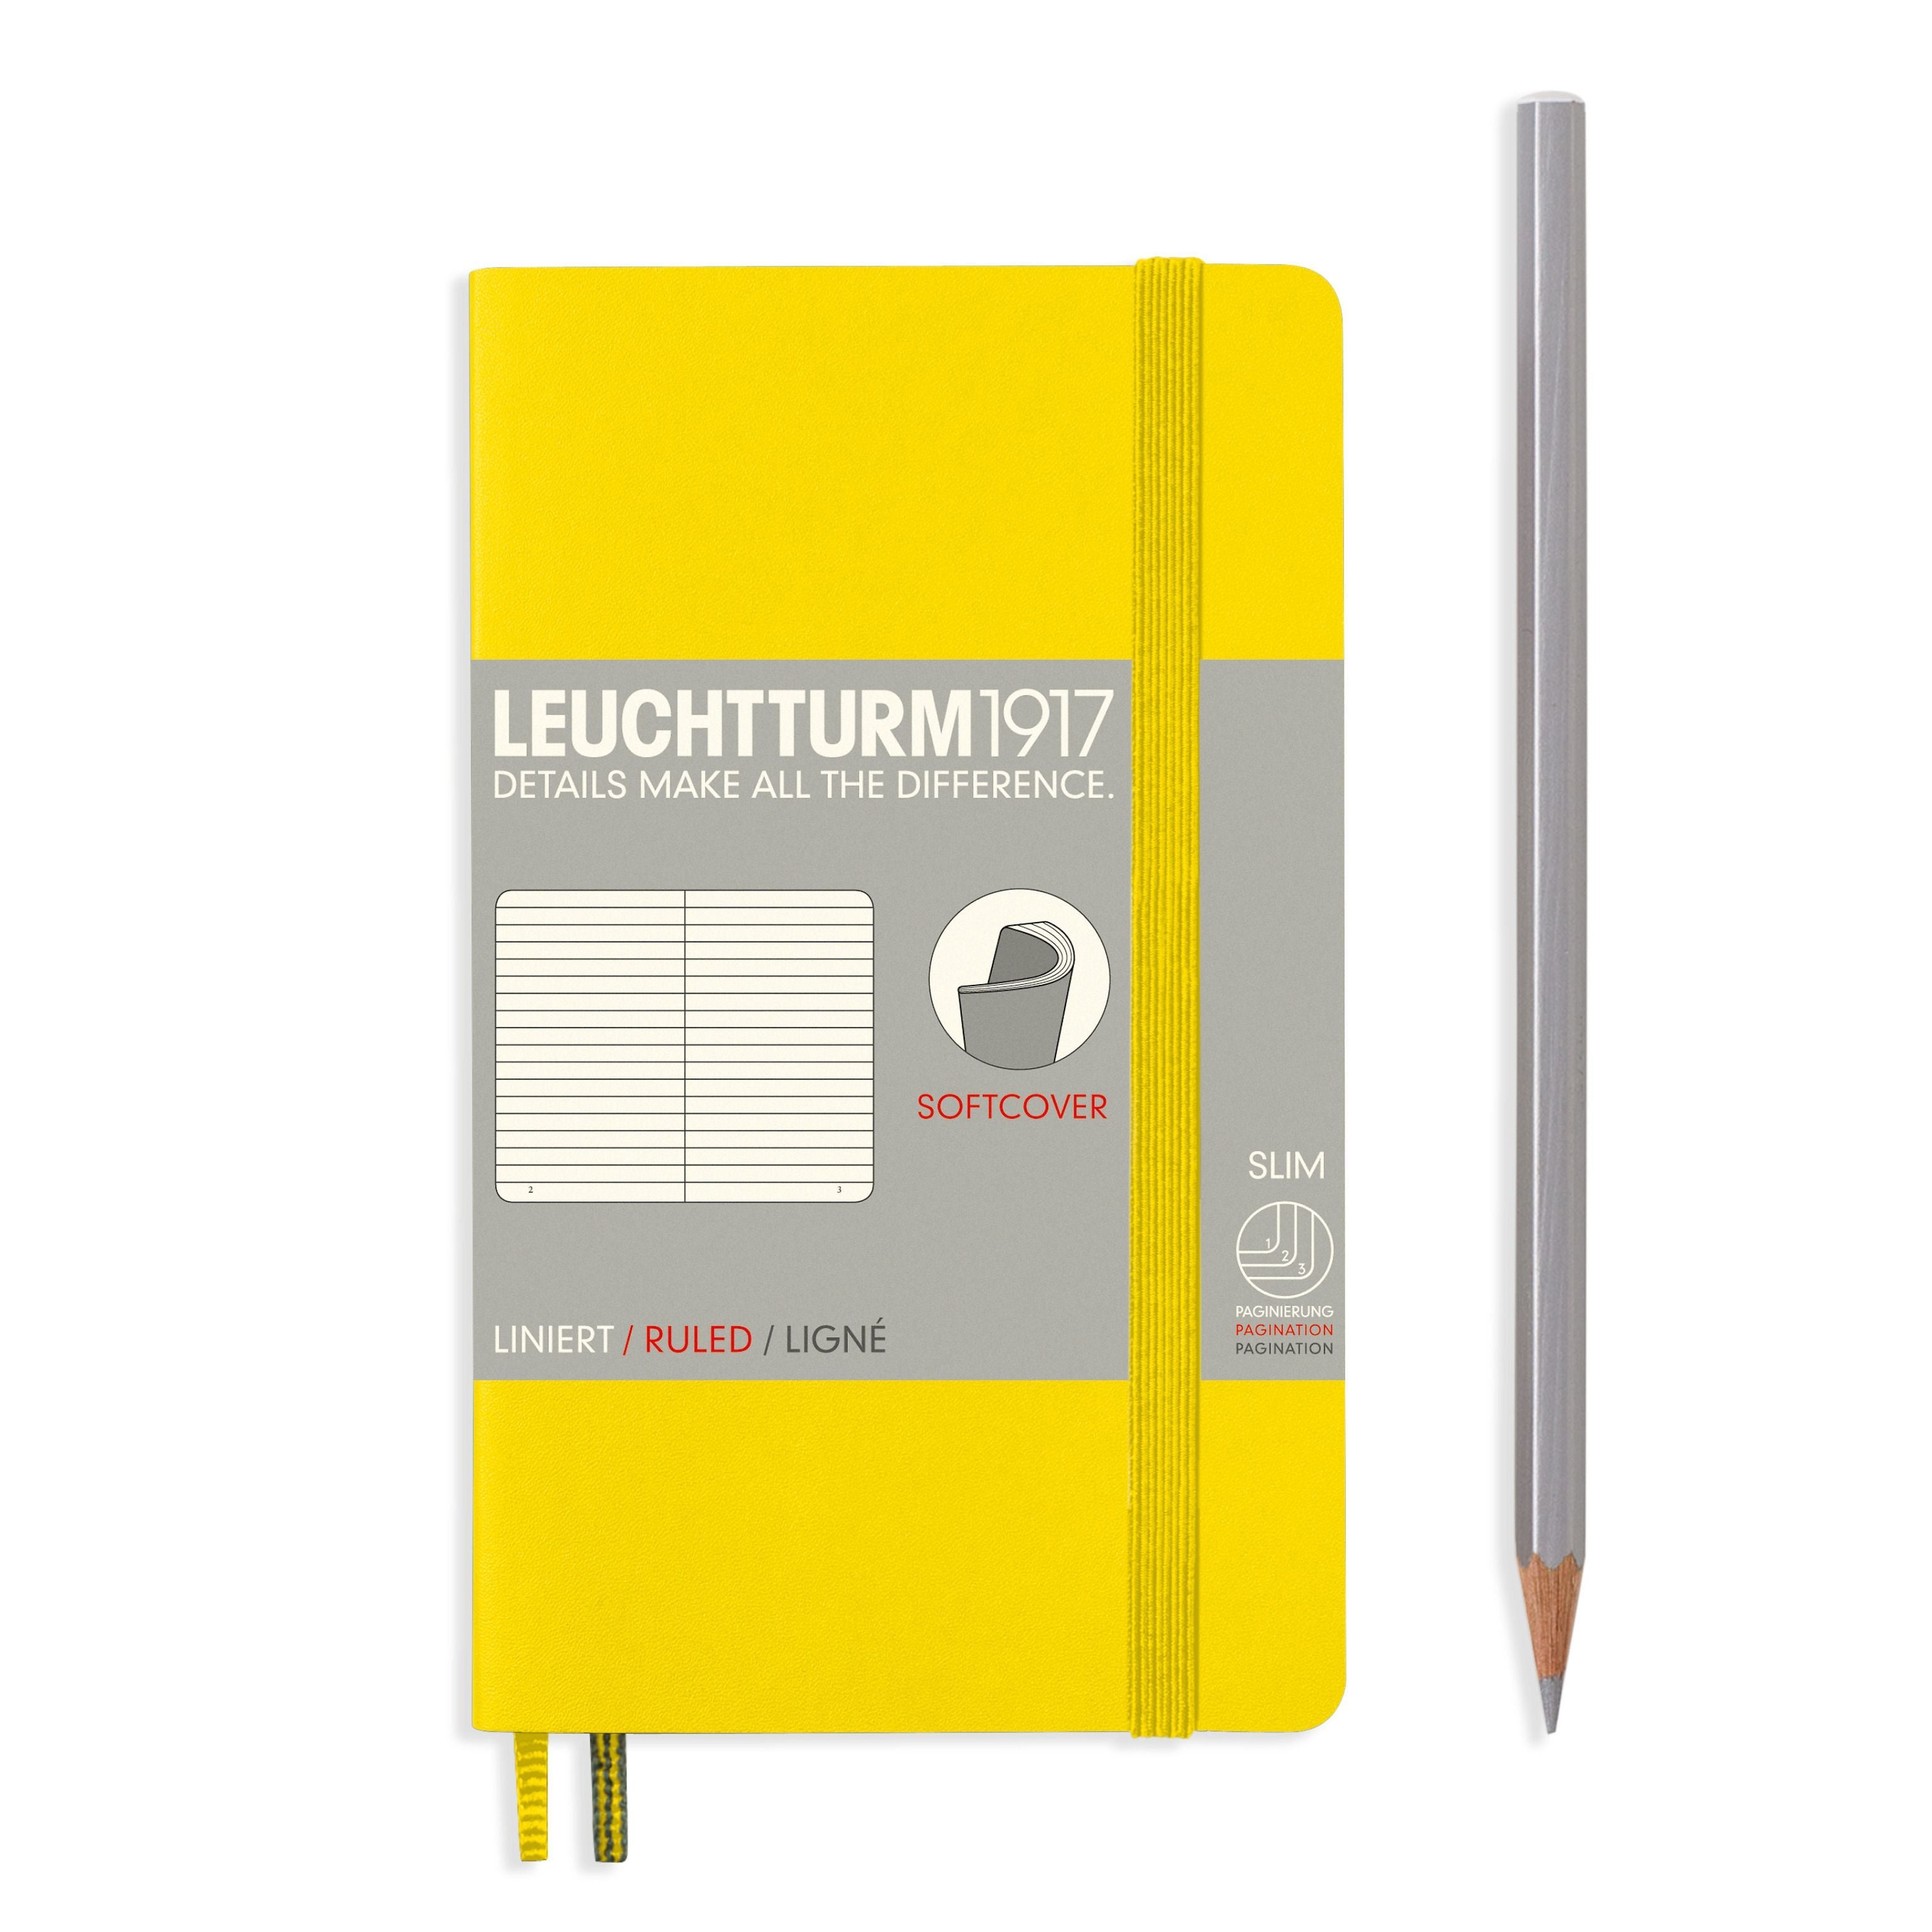 Leuchtturm1917 A6 Pocket Hardcover Dotted Notebook - Sage